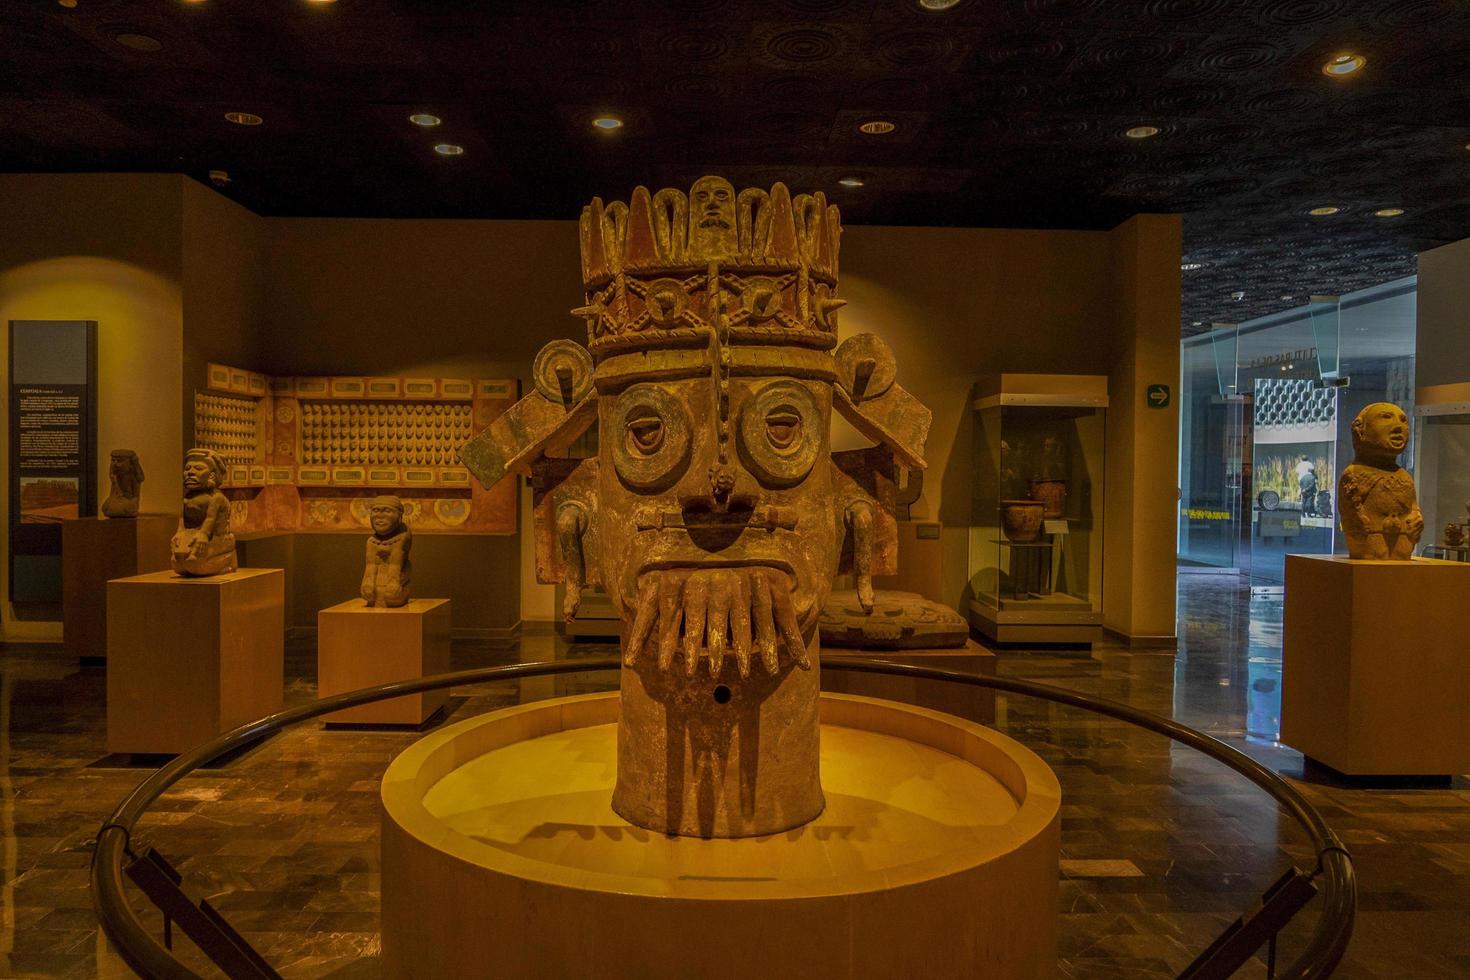 cidade do méxico, méxico - 31 de janeiro de 2019 - museu de antropologia da cidade do méxico foto